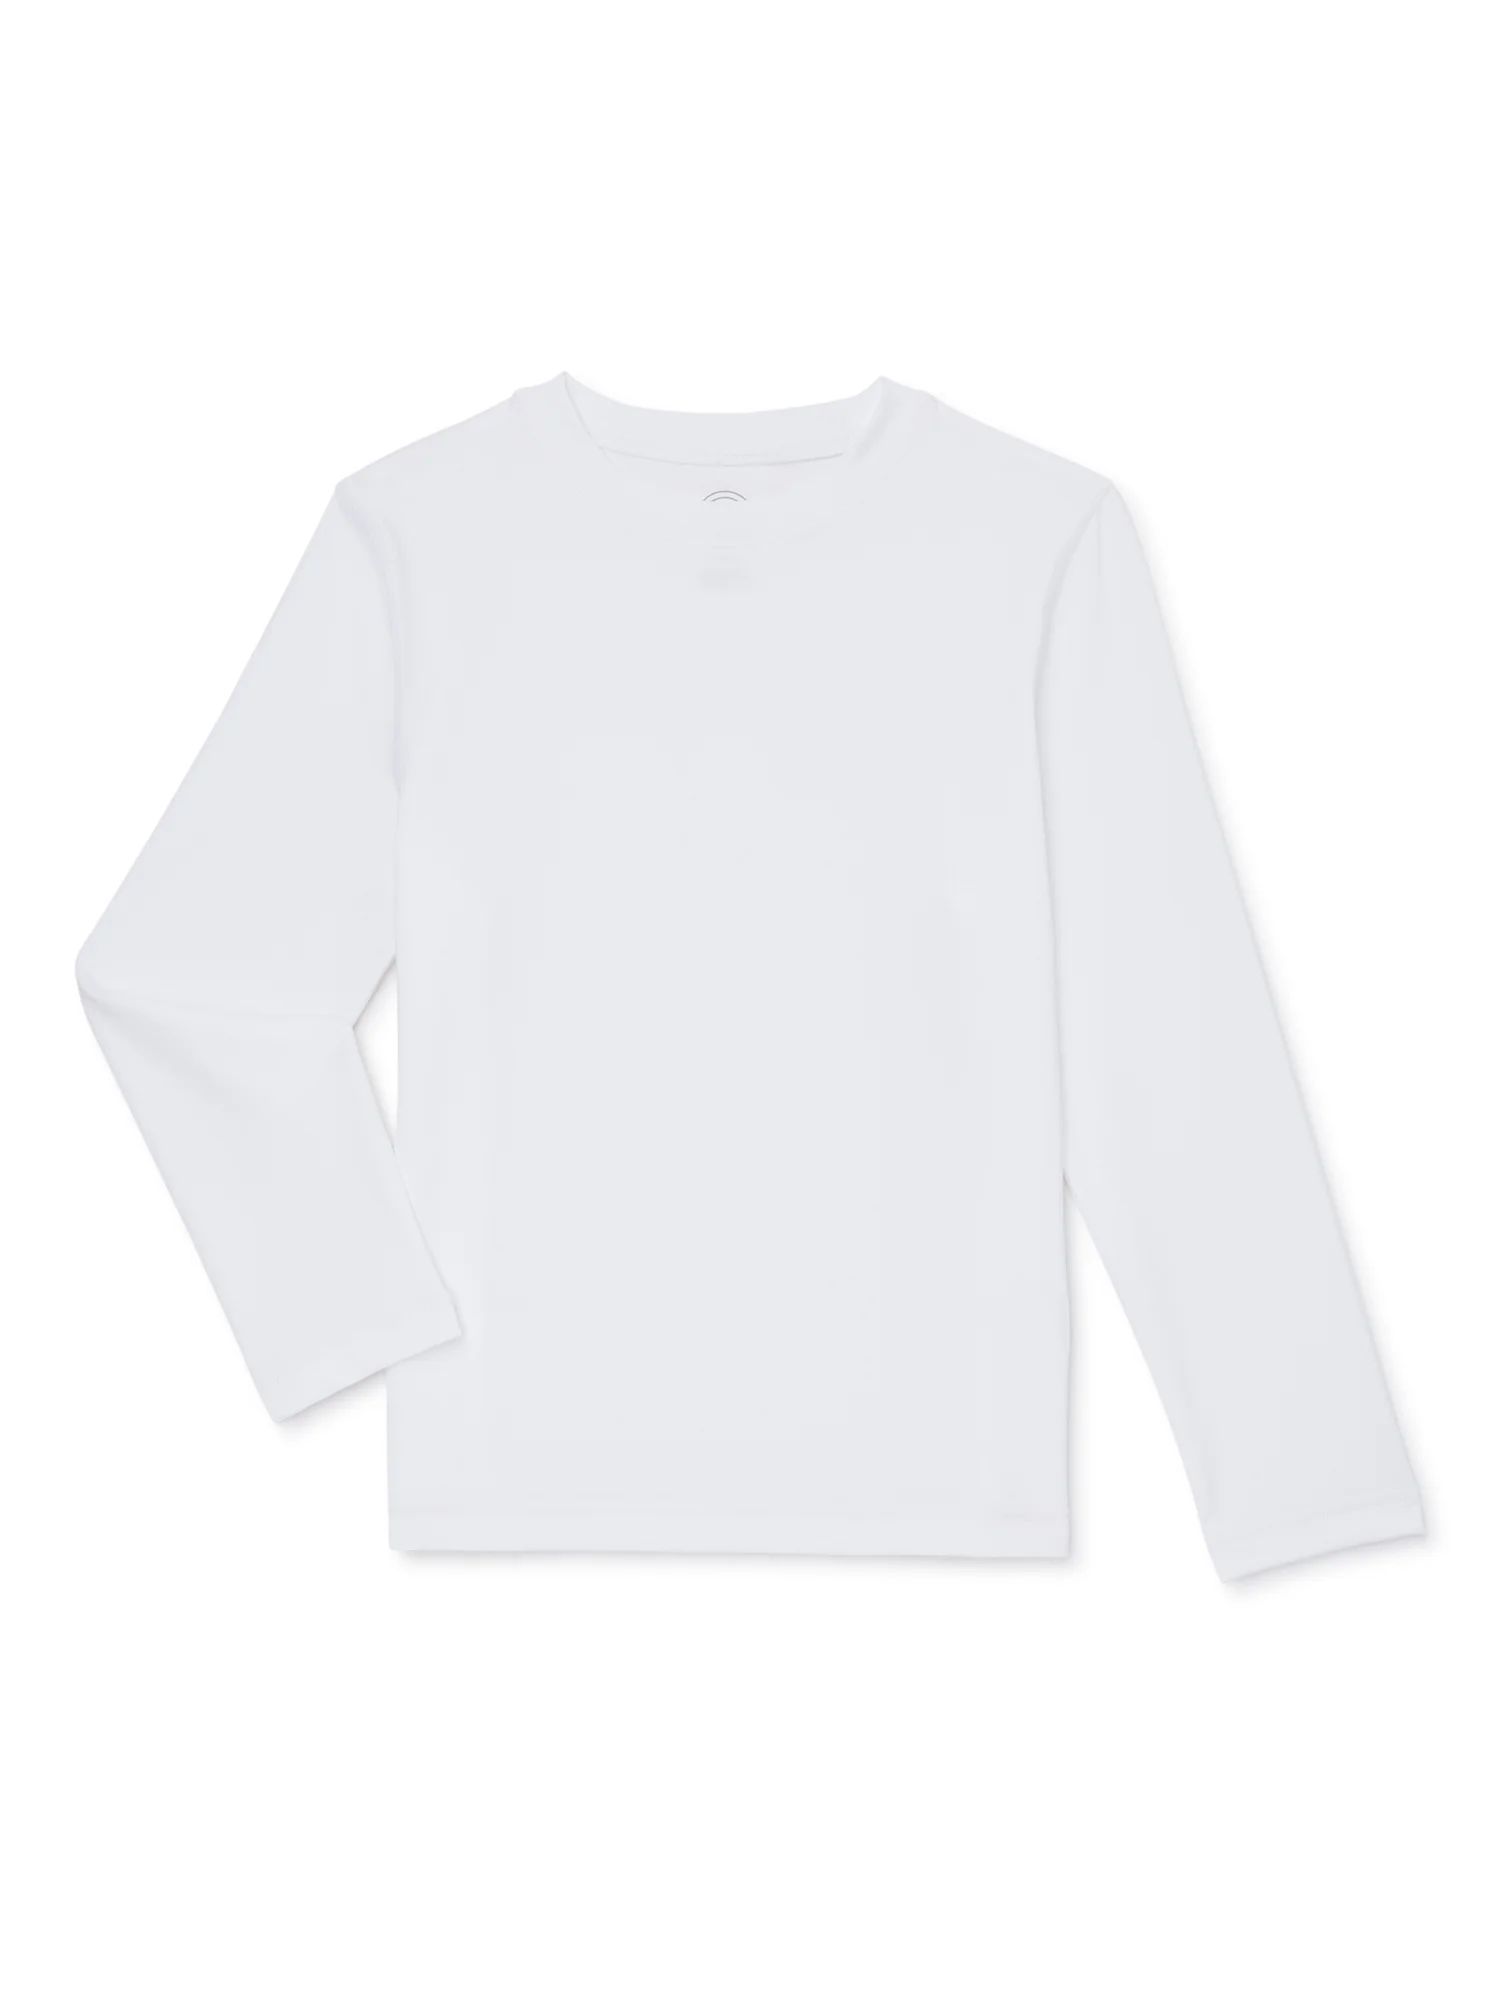 Wonder Nation Boys Long Sleeve Rashguard Shirt with UPF 50+, Sizes 4-18 & Husky | Walmart (US)